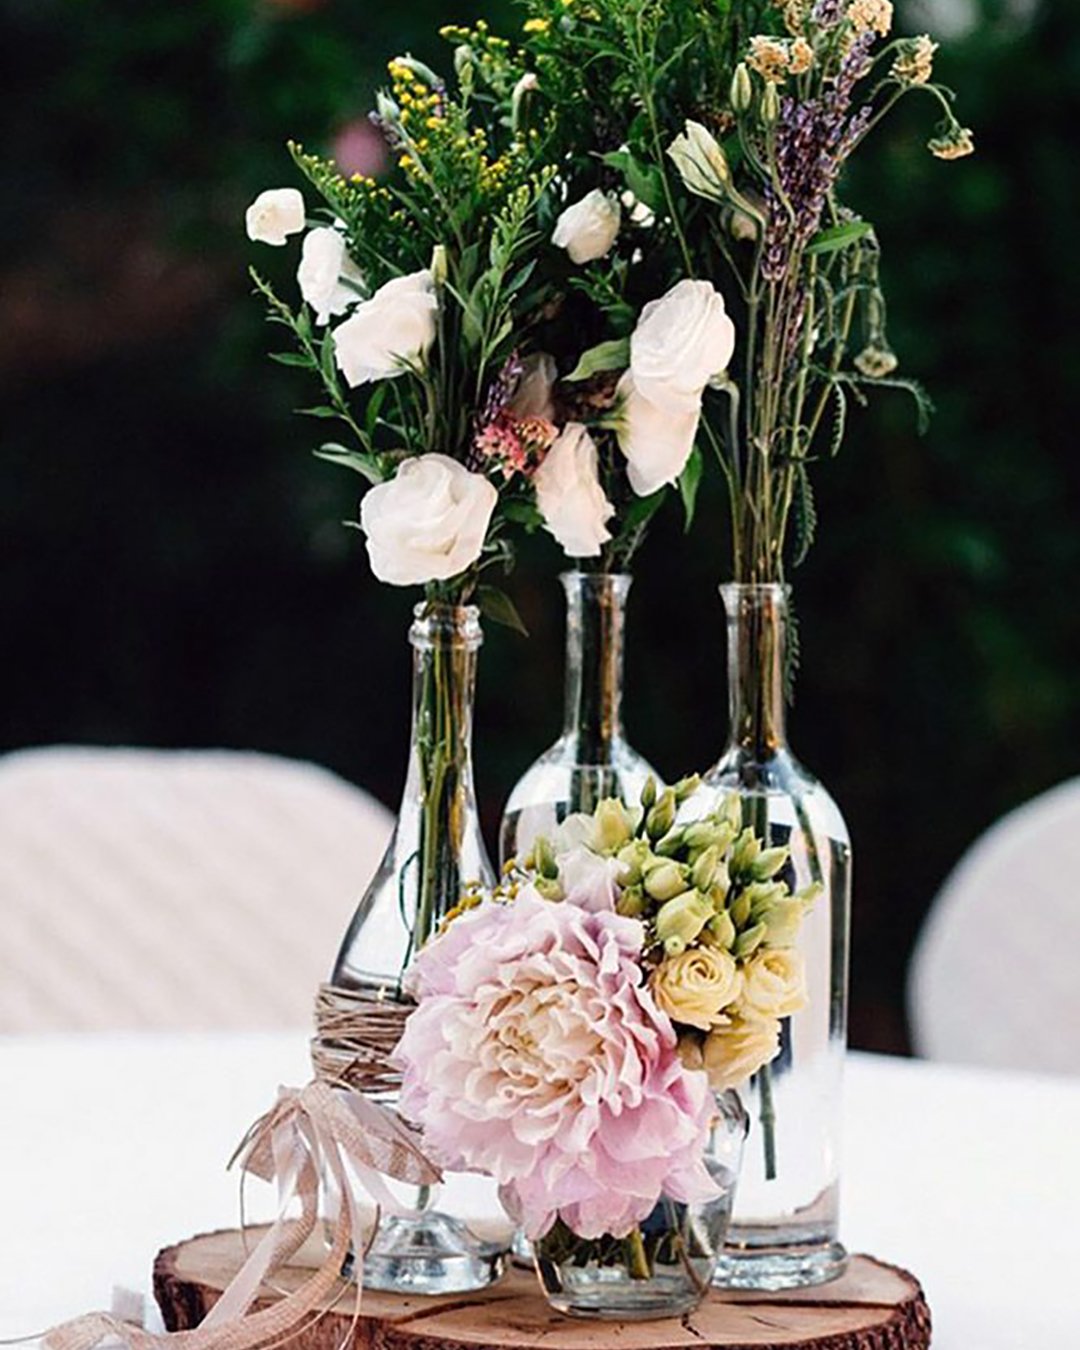 wedding table decorations on a wooden bag in glass bottles flowers rebecca silenzi via instagram